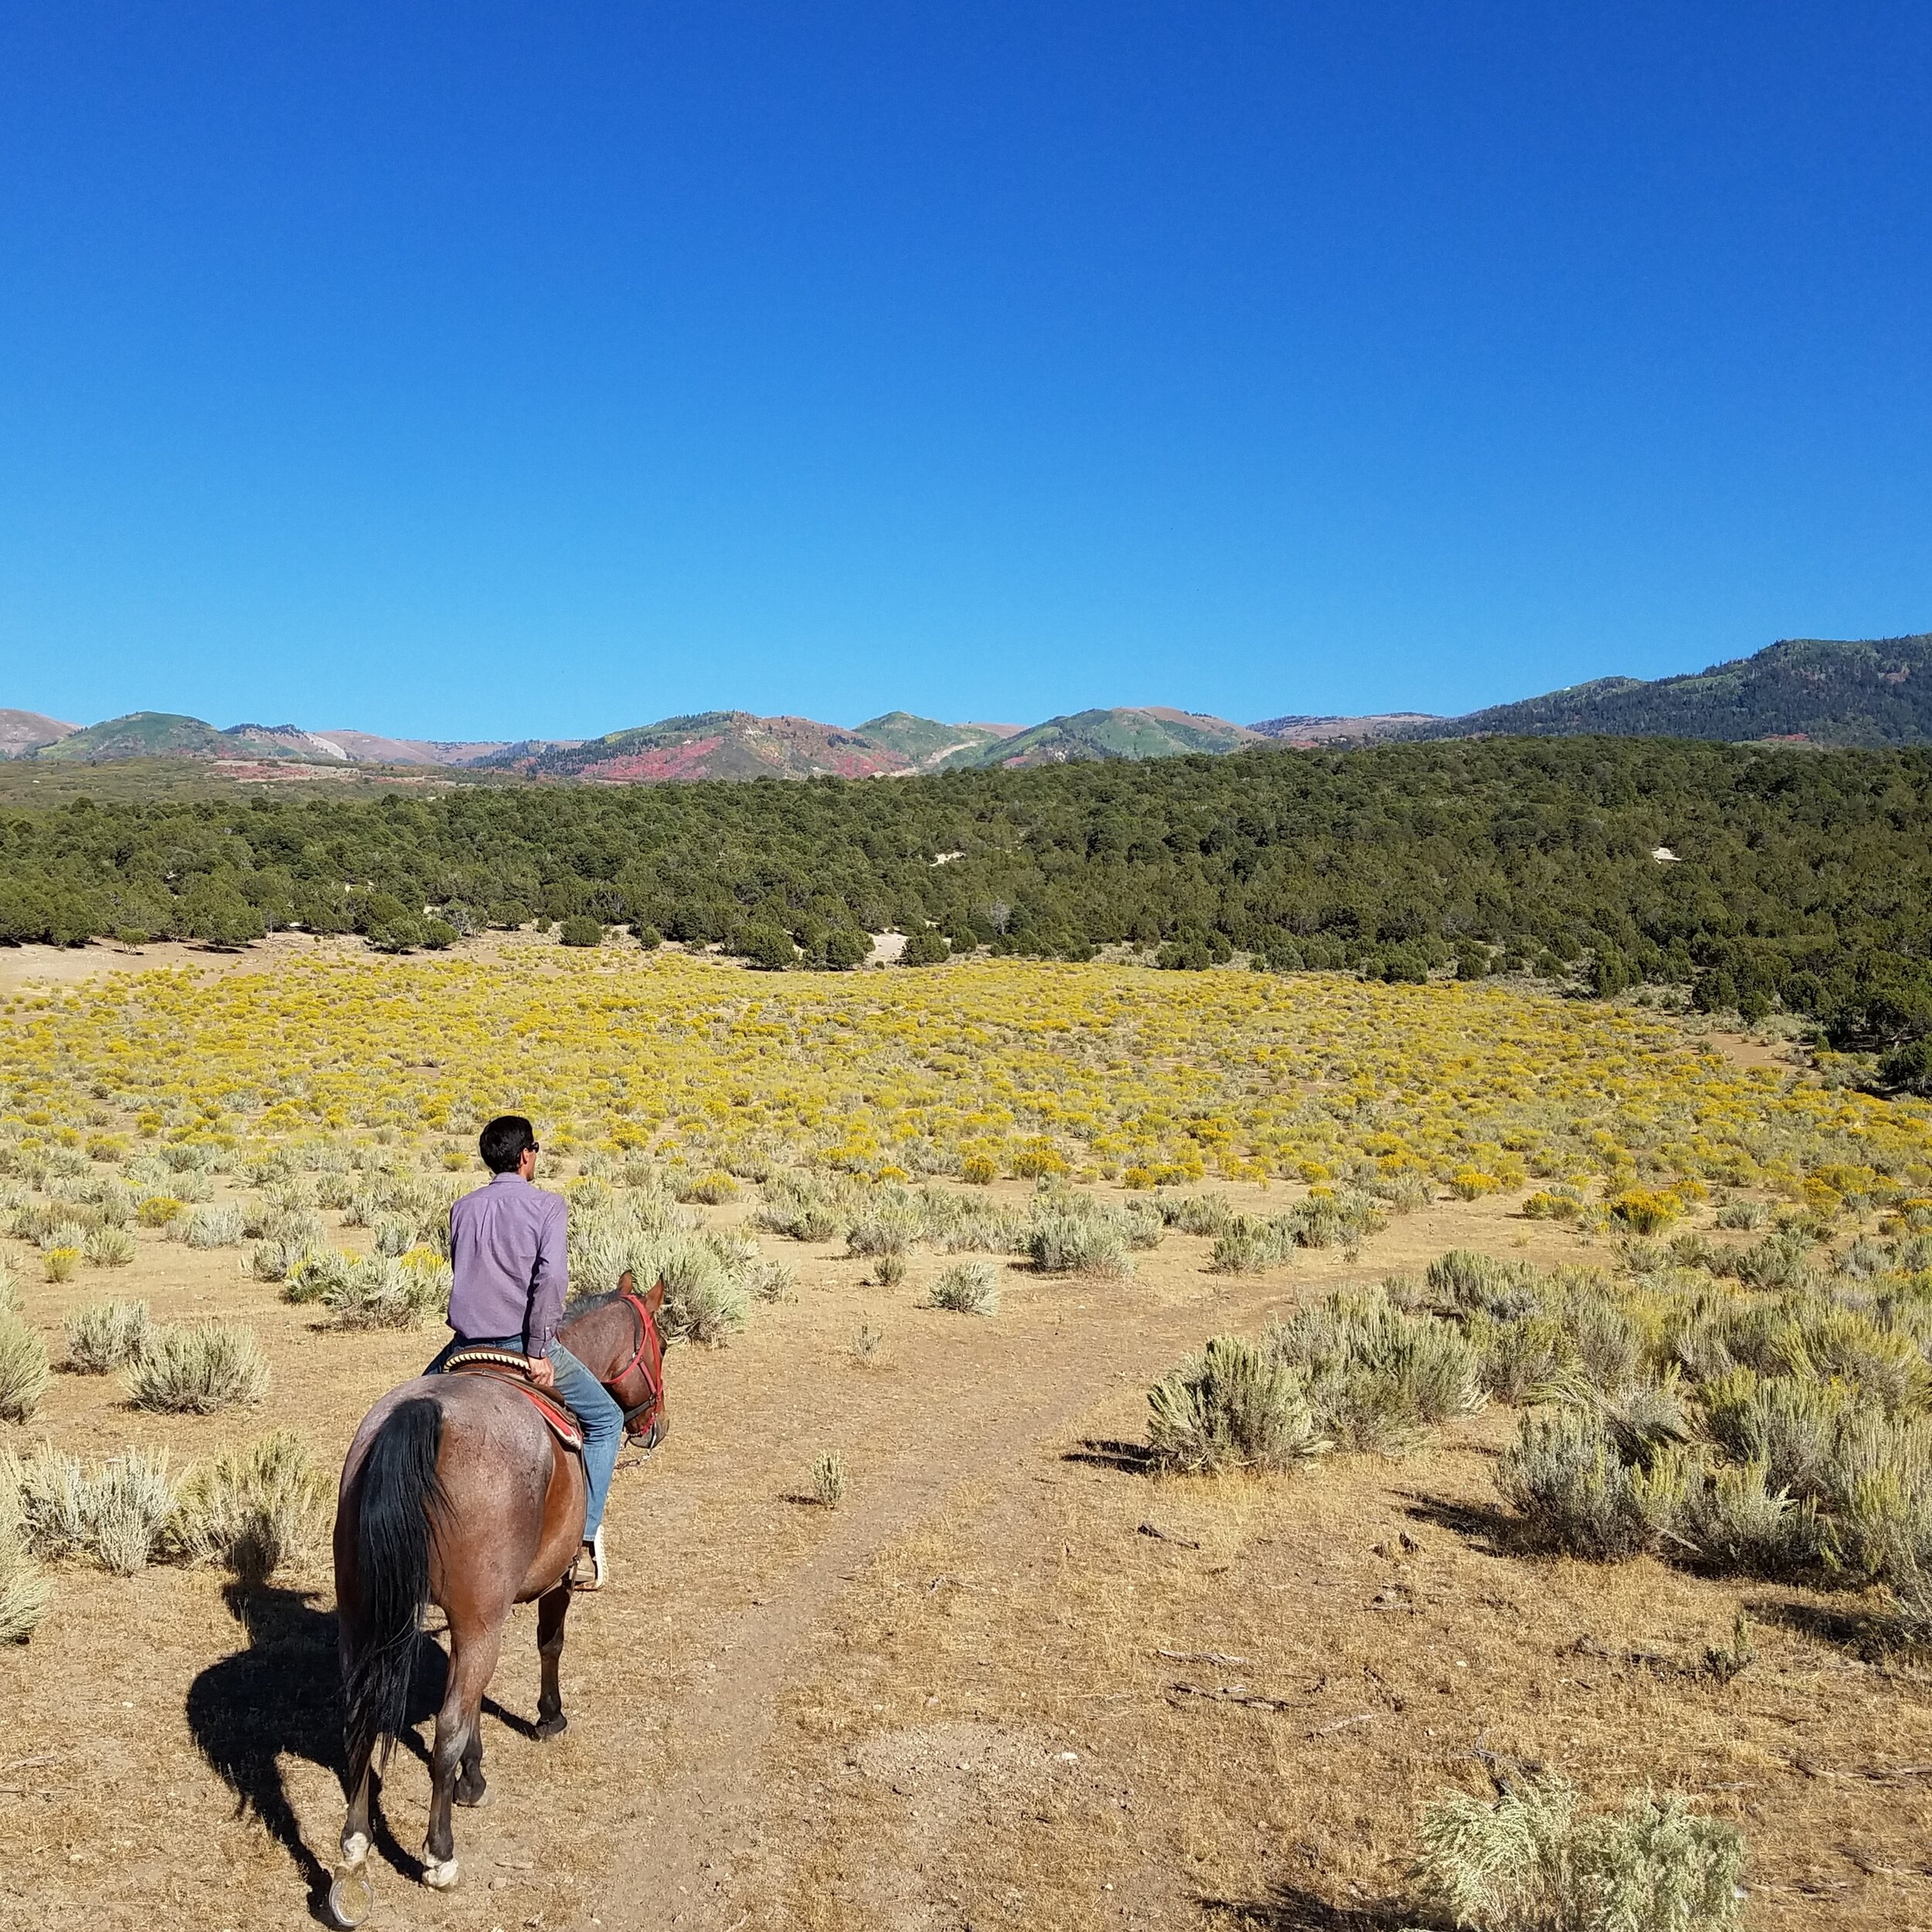 https://images.squarespace-cdn.com/content/v1/5d82f51ce4293f111b63b5d8/1574454043537-SVRSWU3XRWMLD5D13BQA/horseback+riding+fields+fall+Utah.jpg